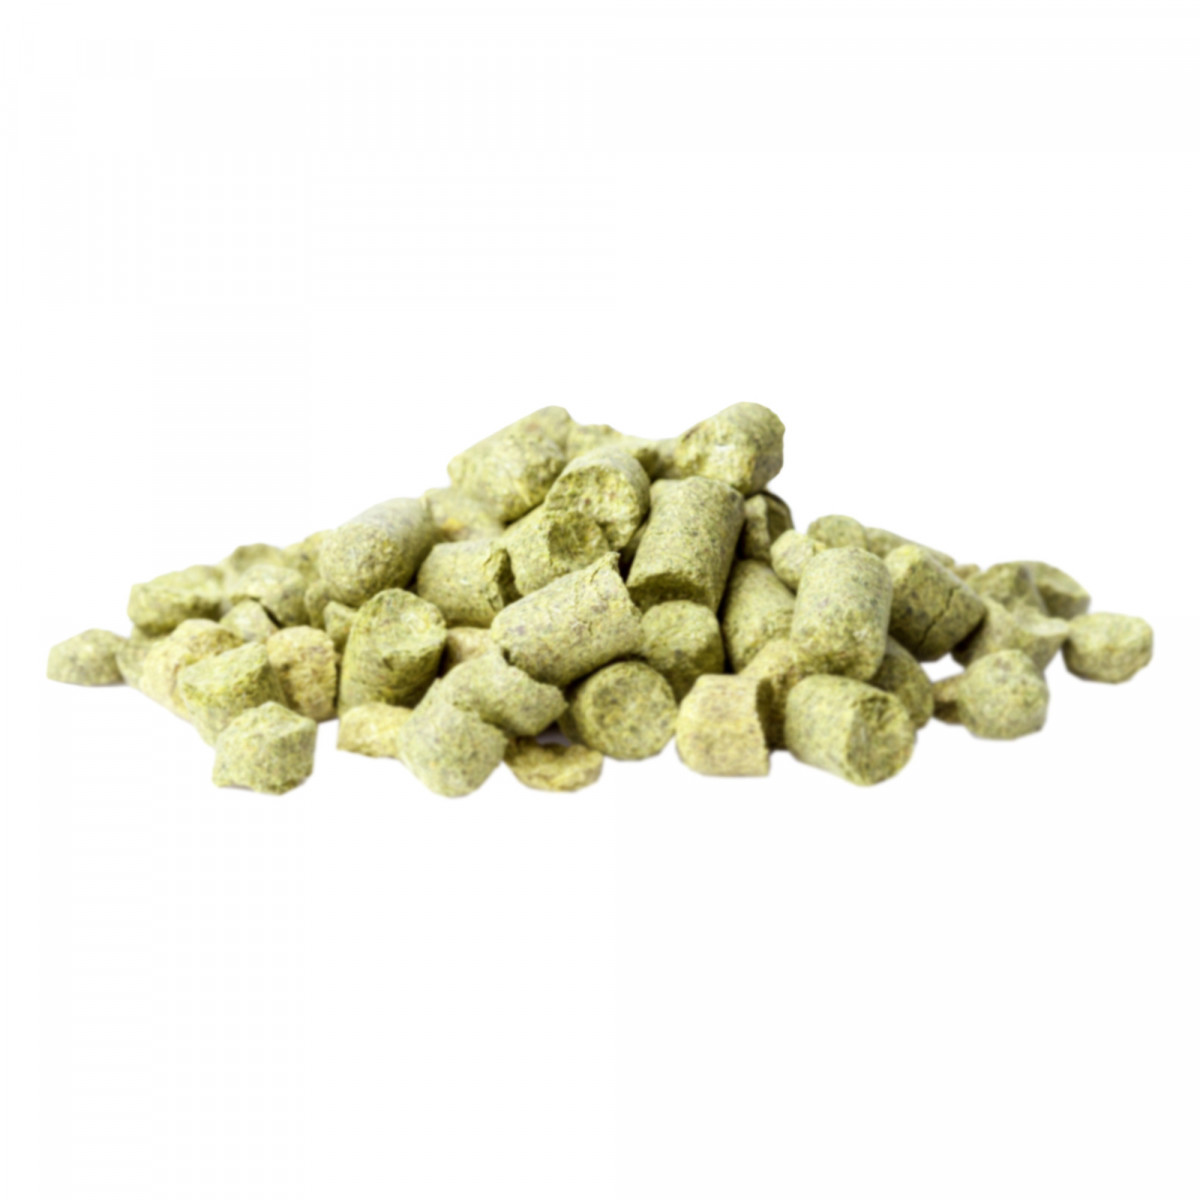 Yakima Chief Hops® Ekuanot® T90 hop pellets - 50 g